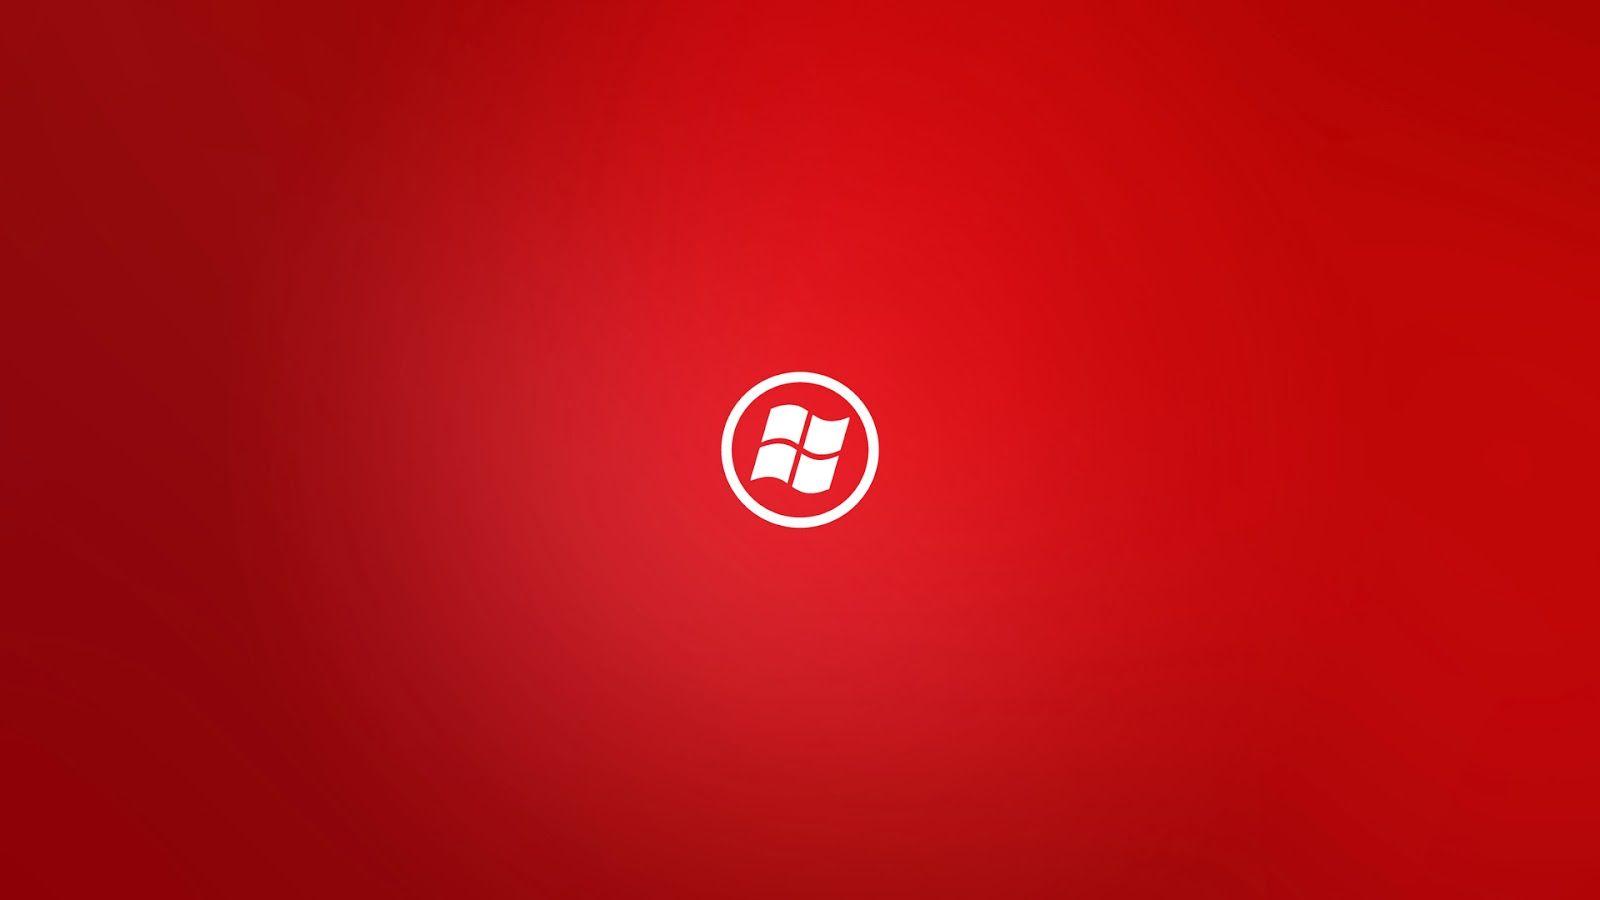 HD wallpaper: Windows 7 Wallpaper Red. windwo 7. Wallpaper